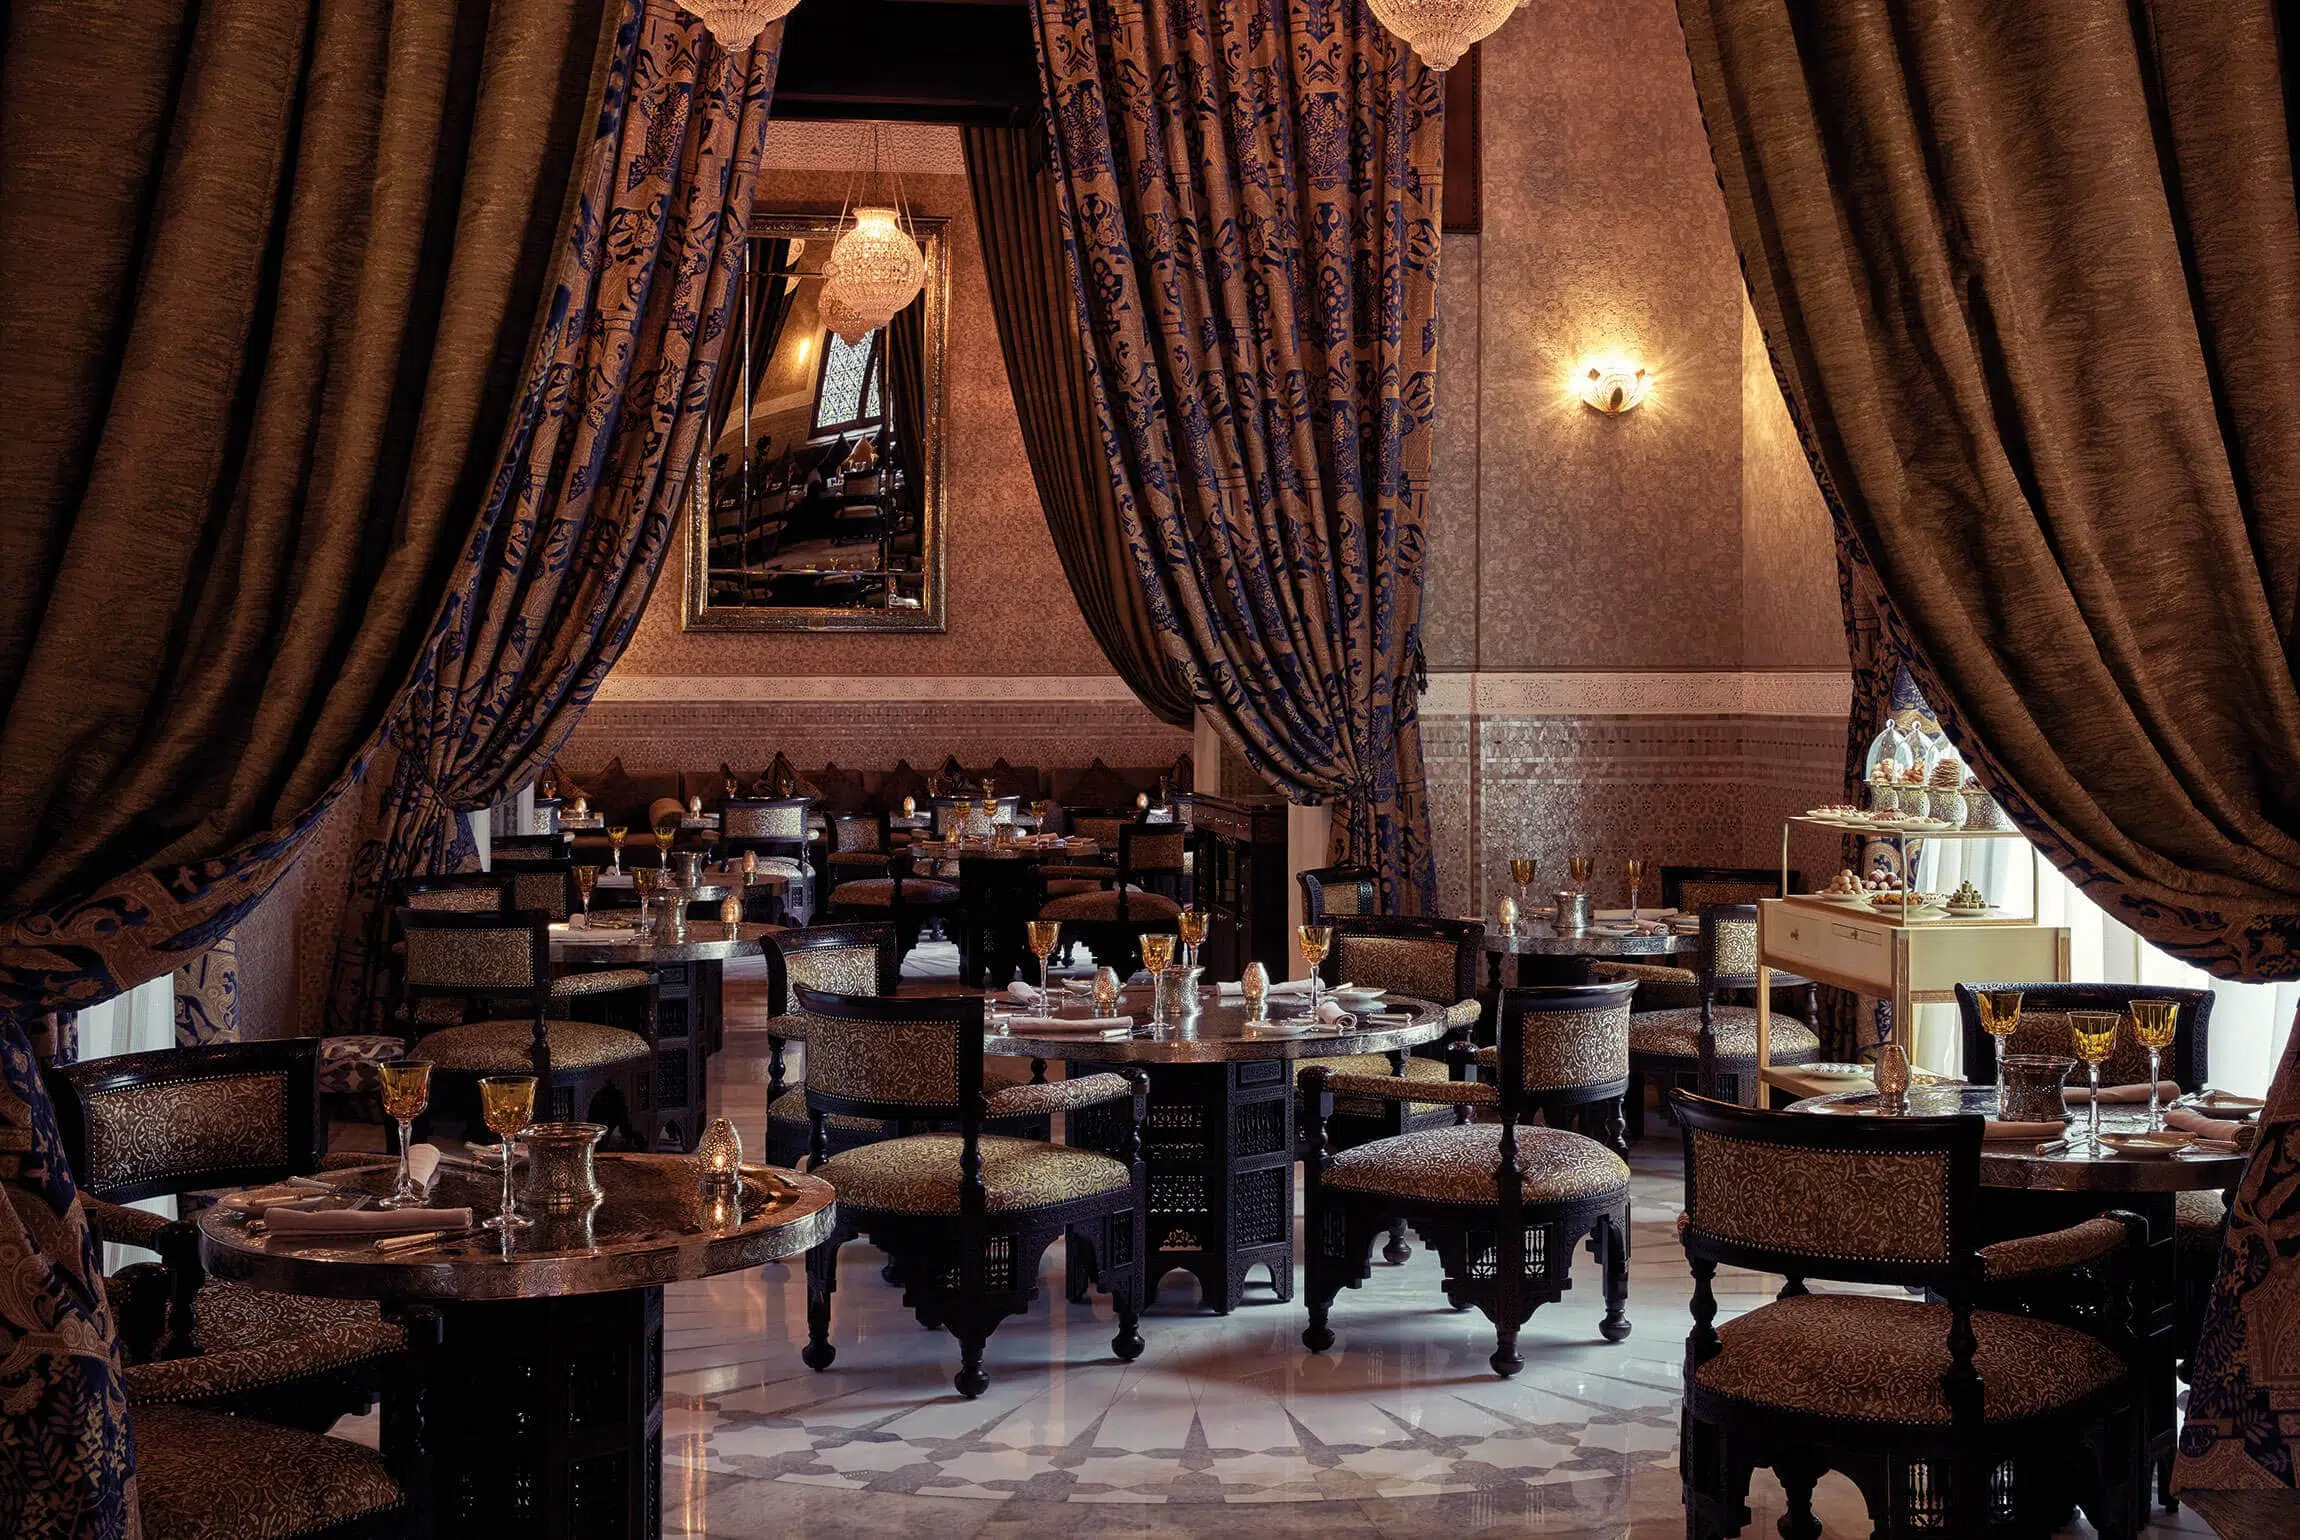 Morocco Restaurants with Italian furniture